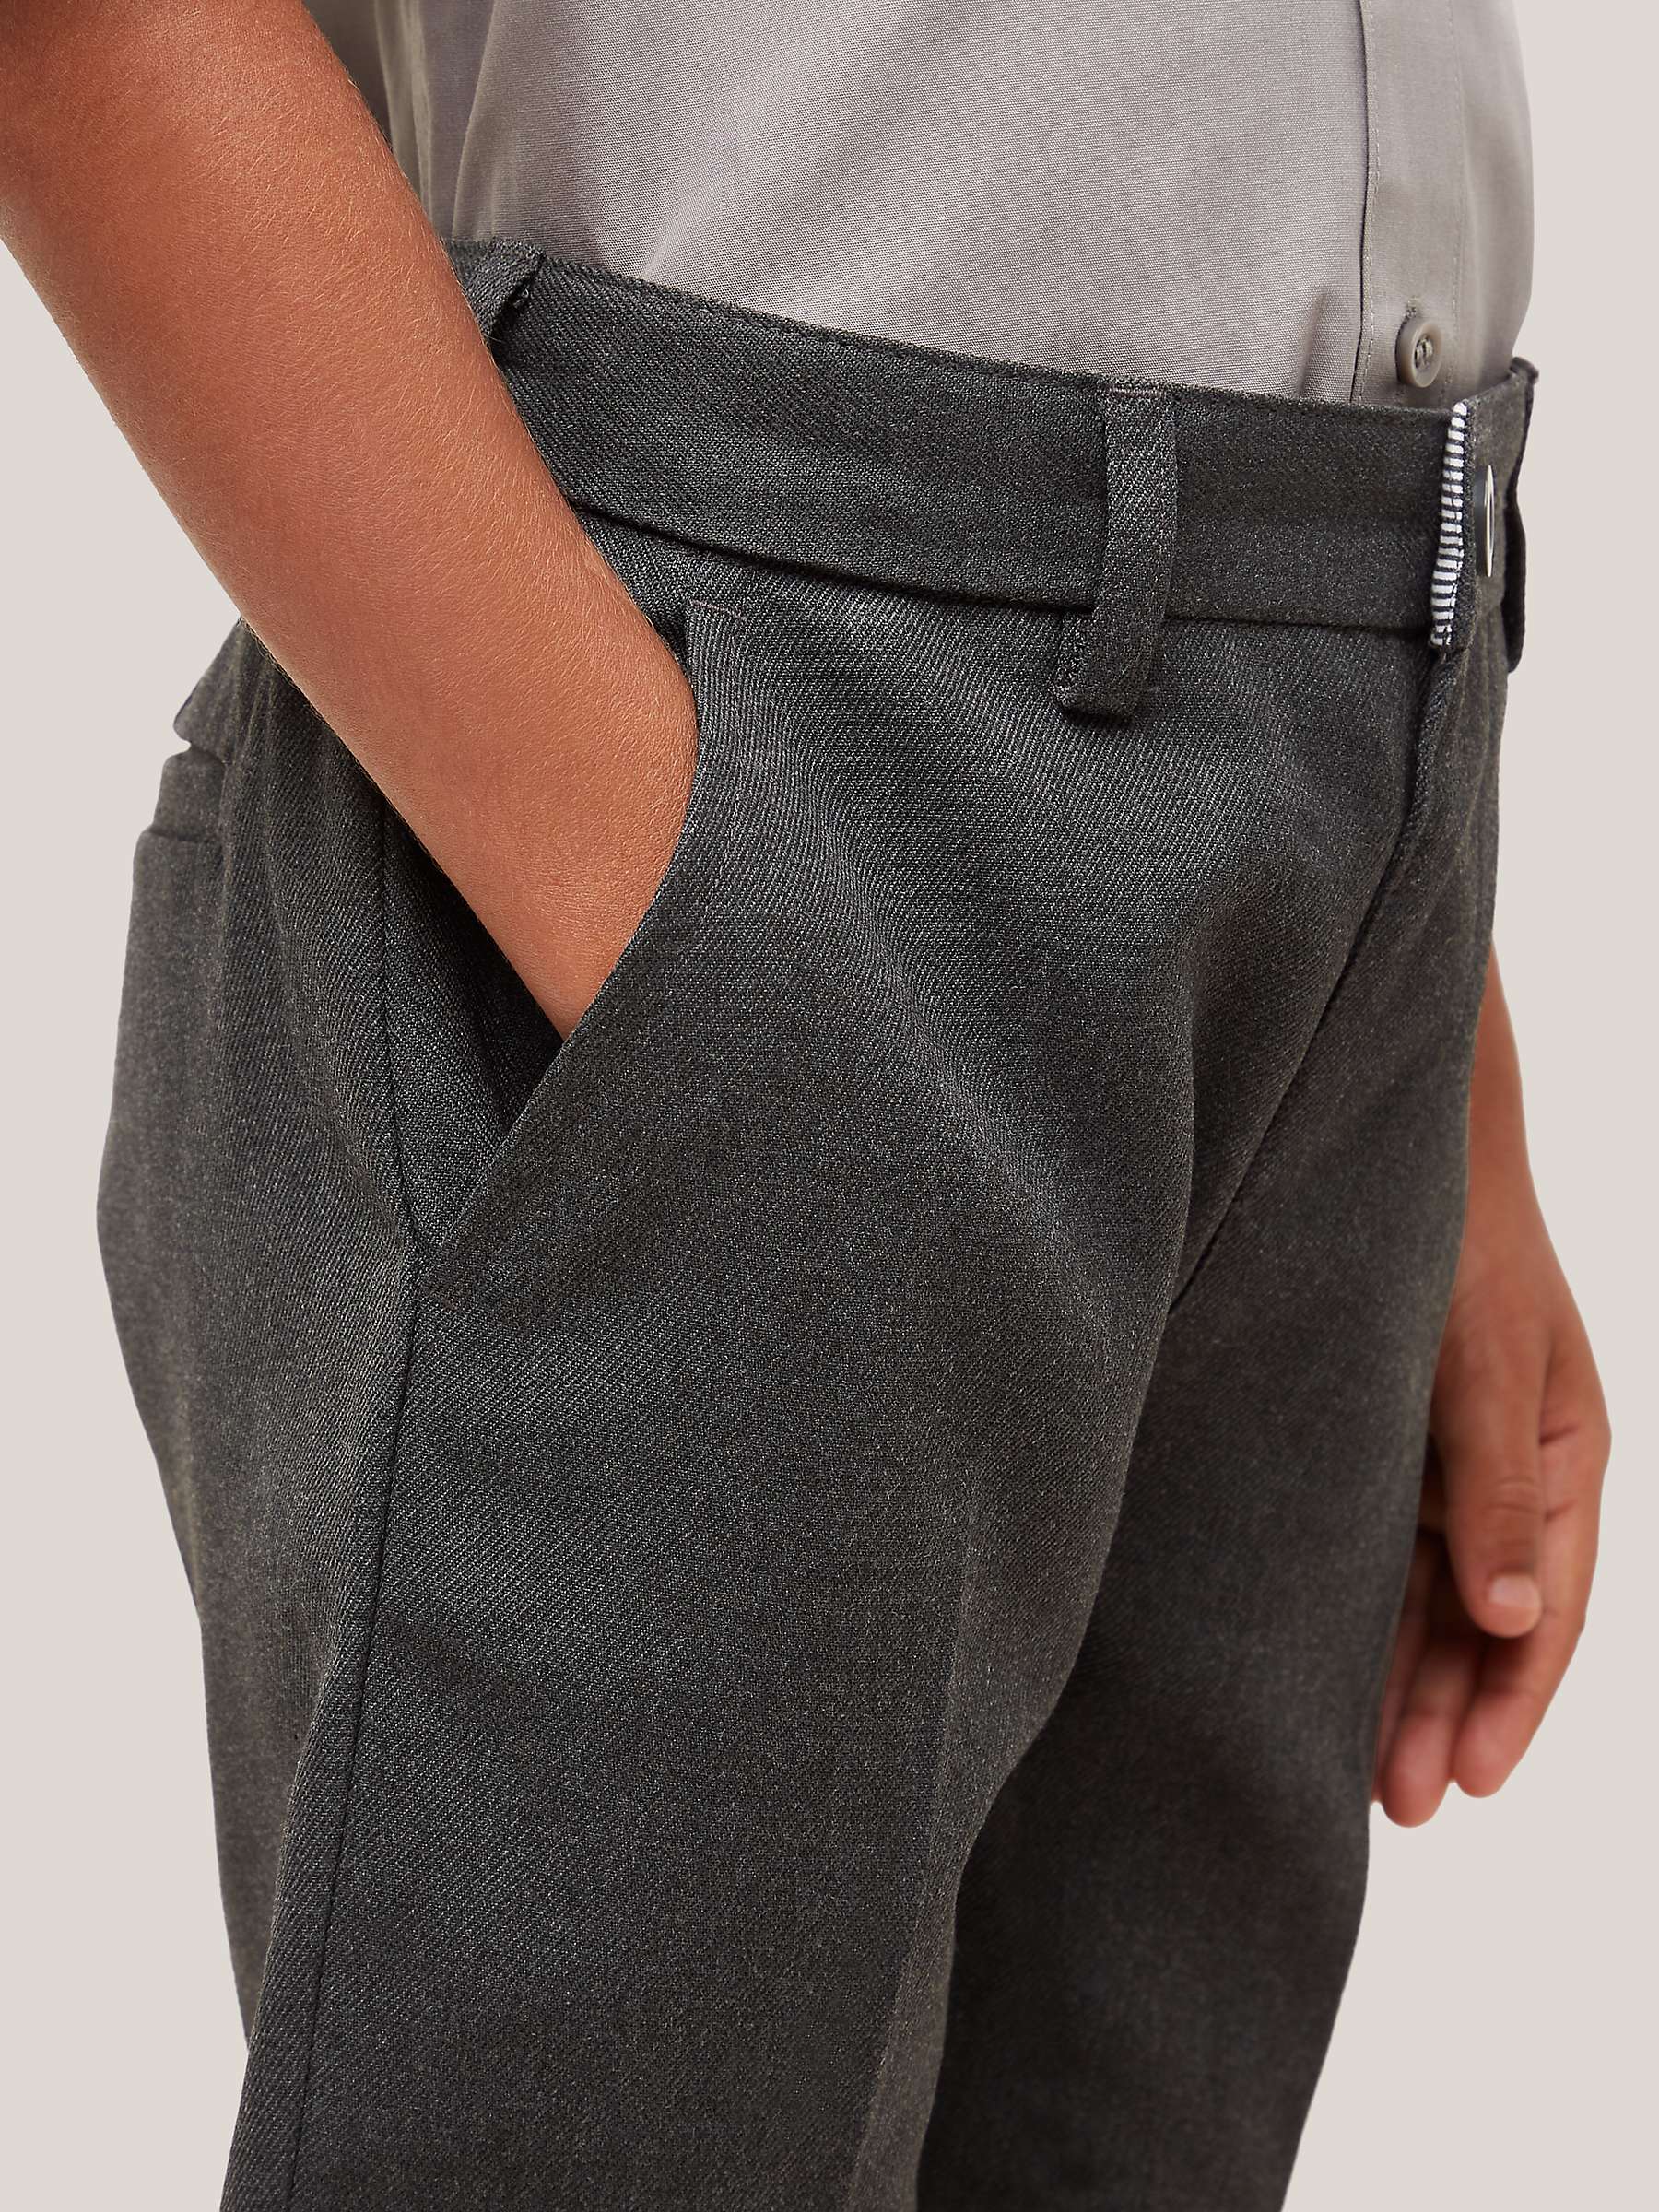 Buy John Lewis Boys' Adjustable Waist Slim Leg School Shorts, Grey Online at johnlewis.com